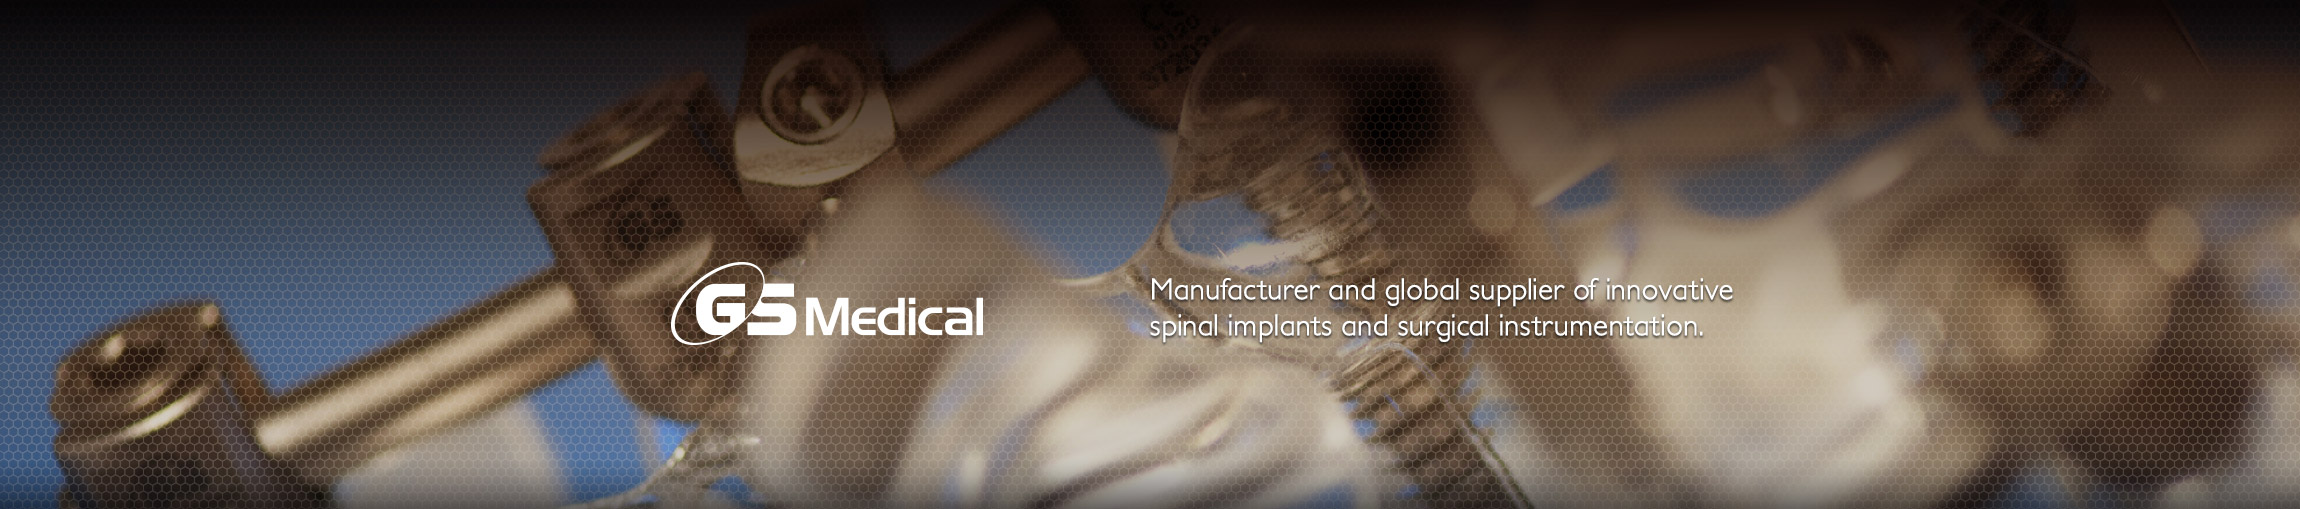 GS Medical USA spinal implants surgical instrumentation - Graphic Regime